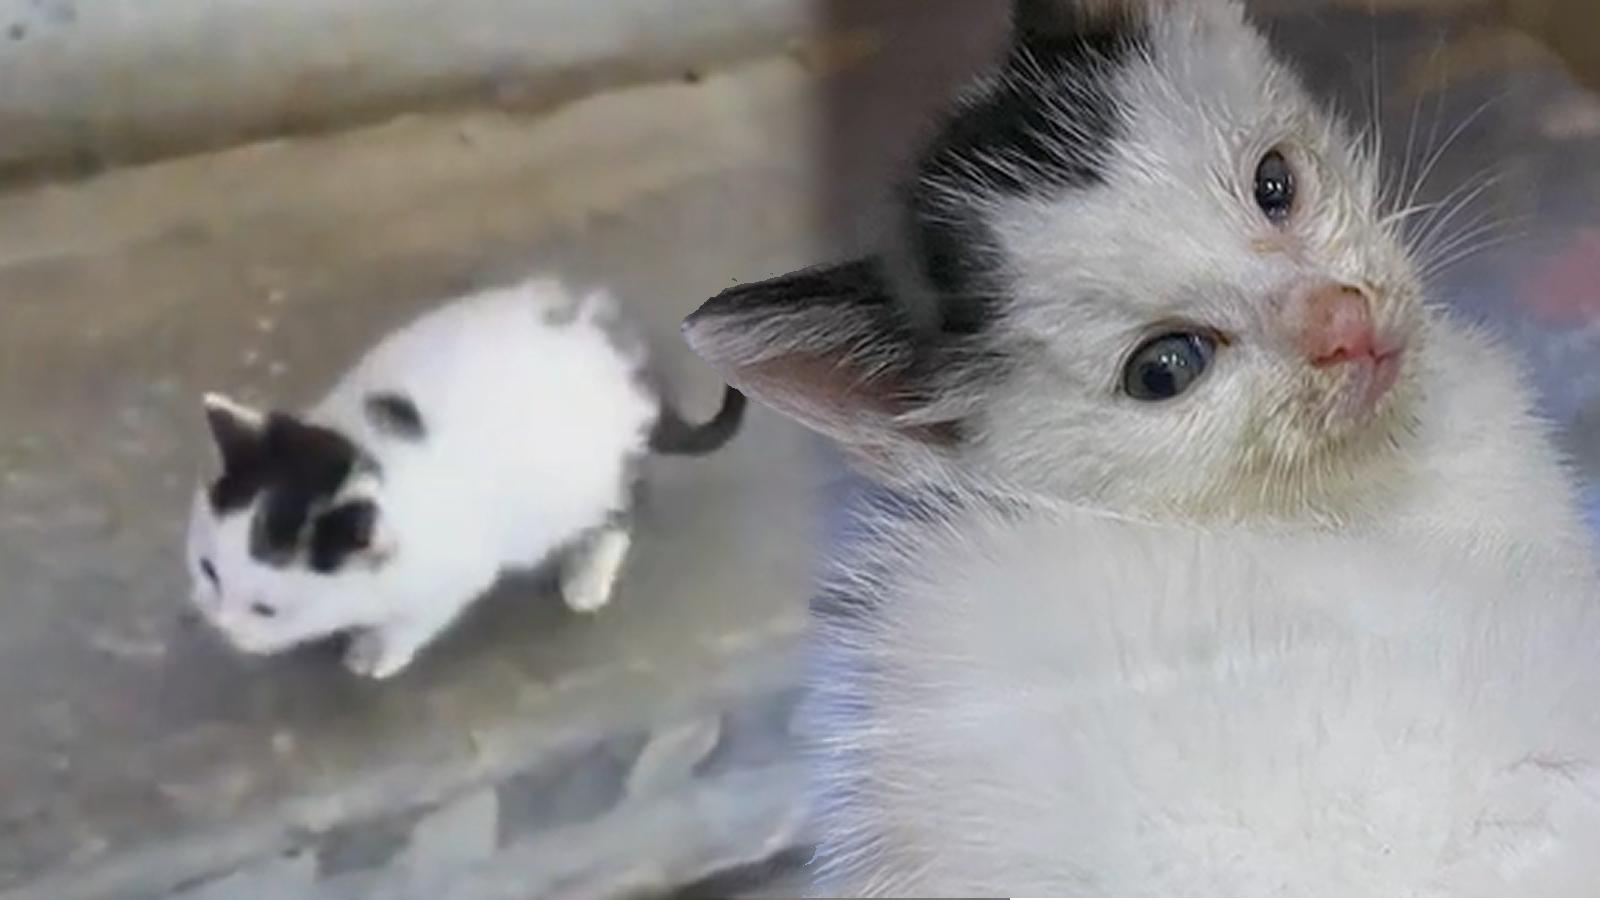 IRL Twitch streamer CookSux saves stray kitten